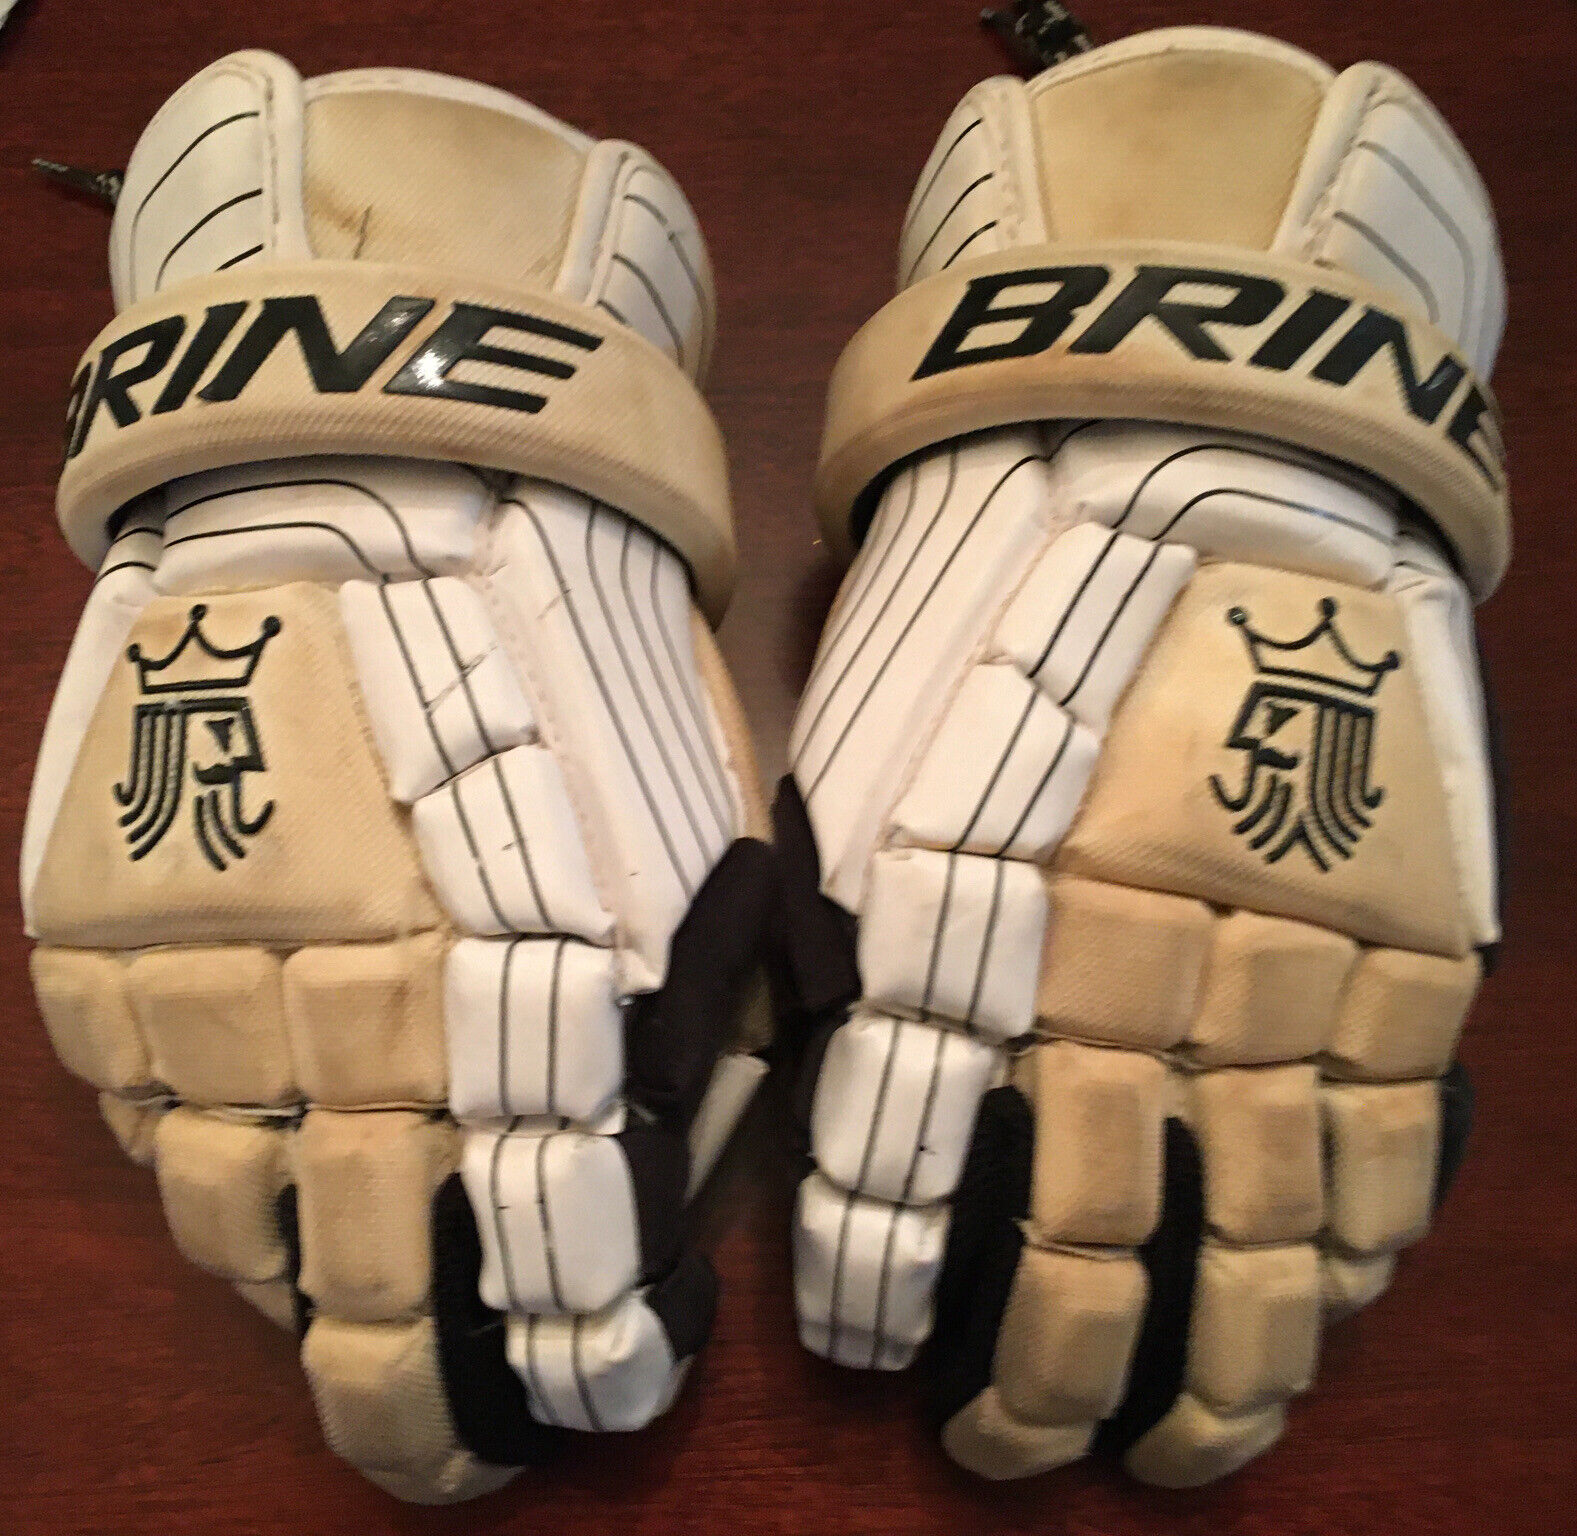 Brine 13” Lacrosse Gloves Lglksl2s Ventilator  White Good Condition Free Ship